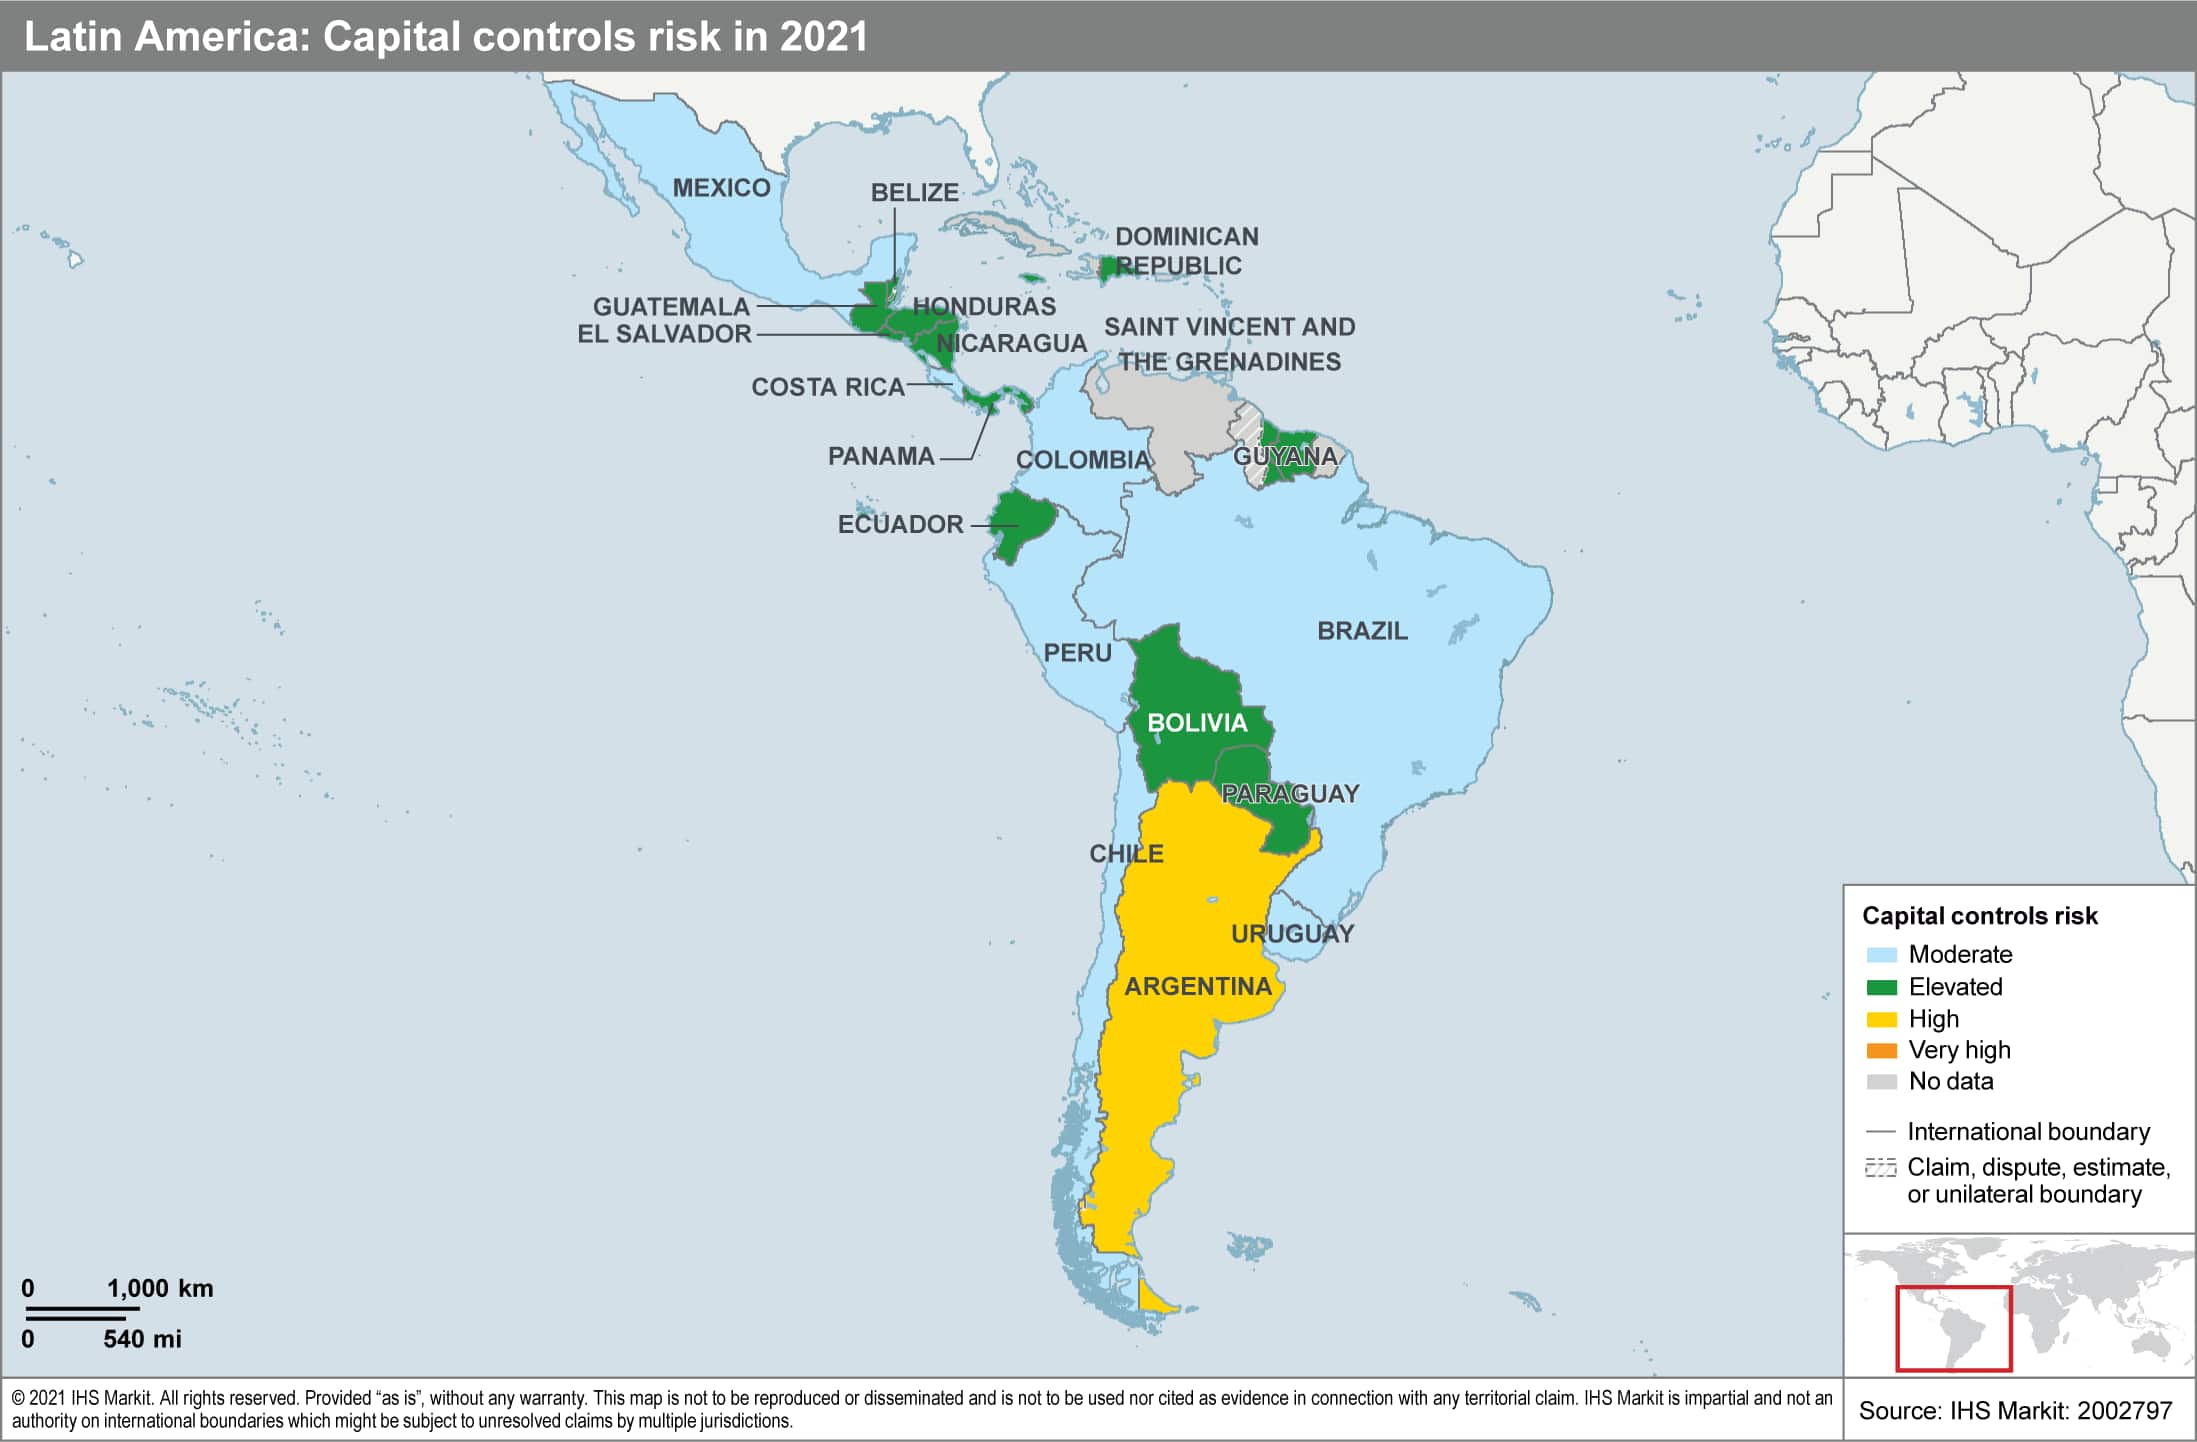 Latin America capital controls risks in 2021